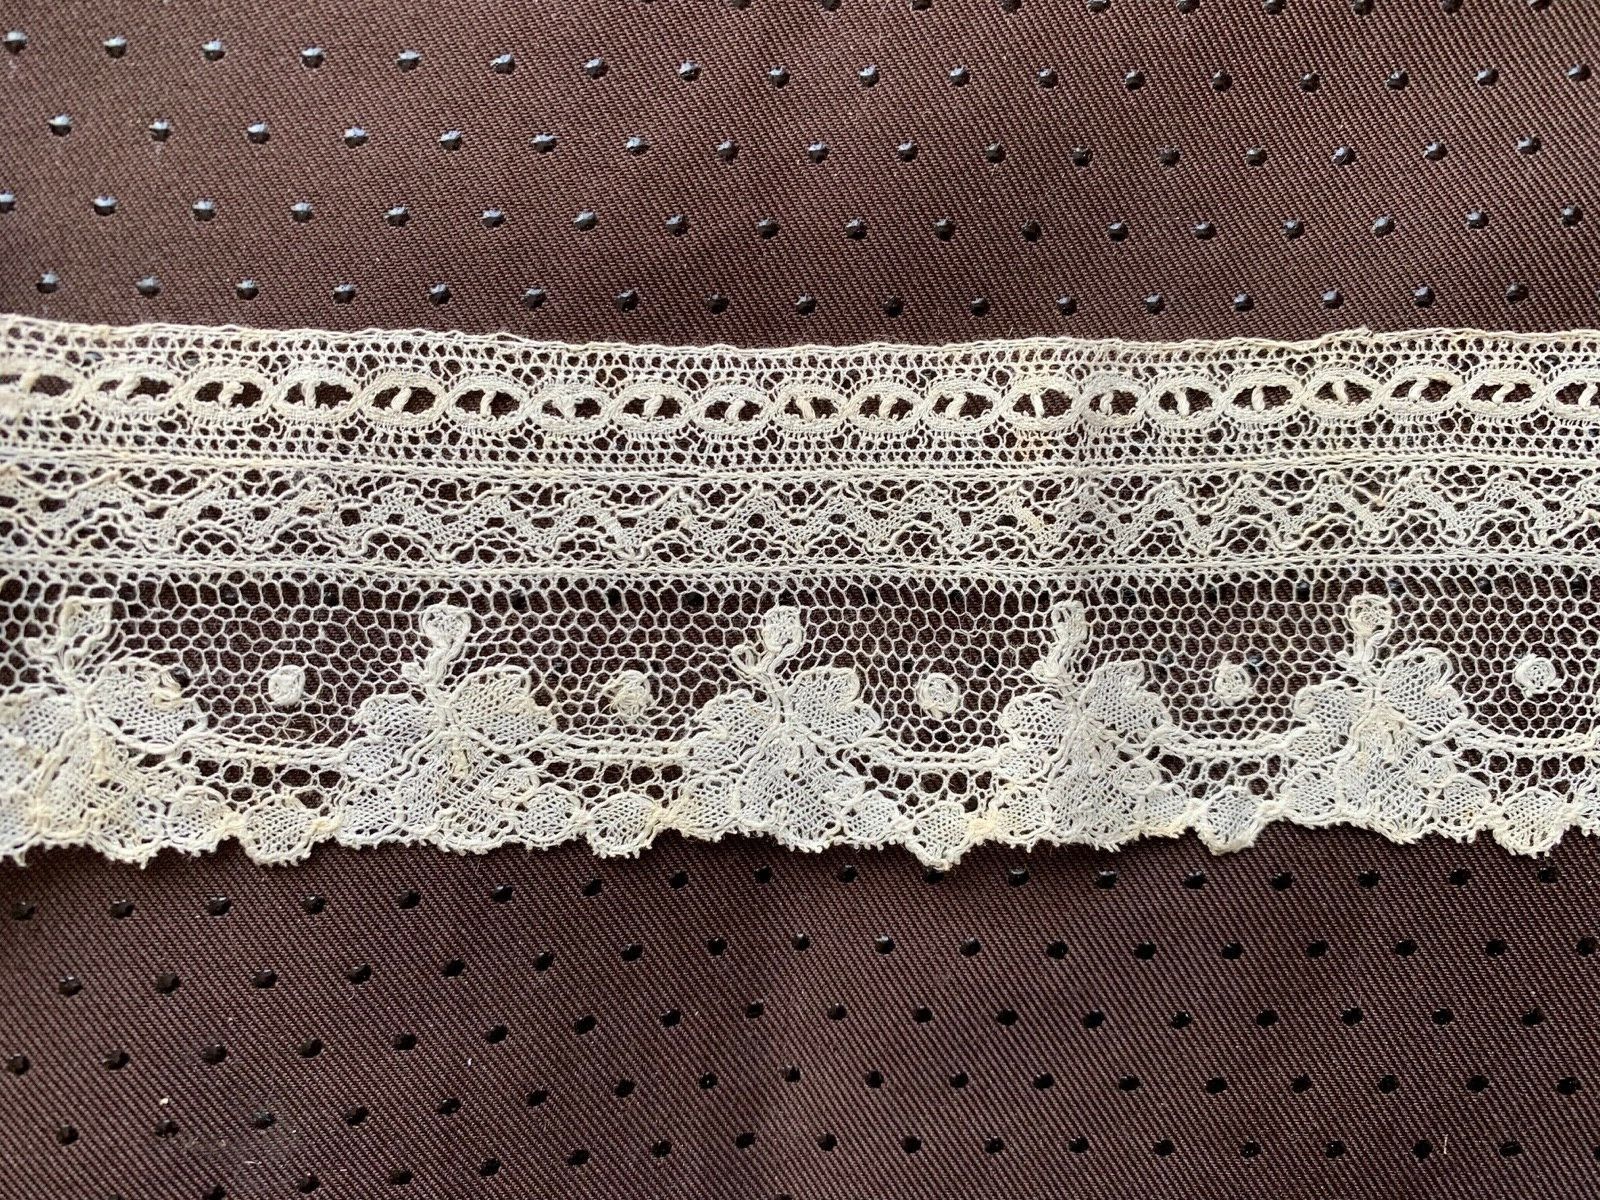 Rare Antique French Handmade lace - 35cm + 115cm by 6cm - Floral design